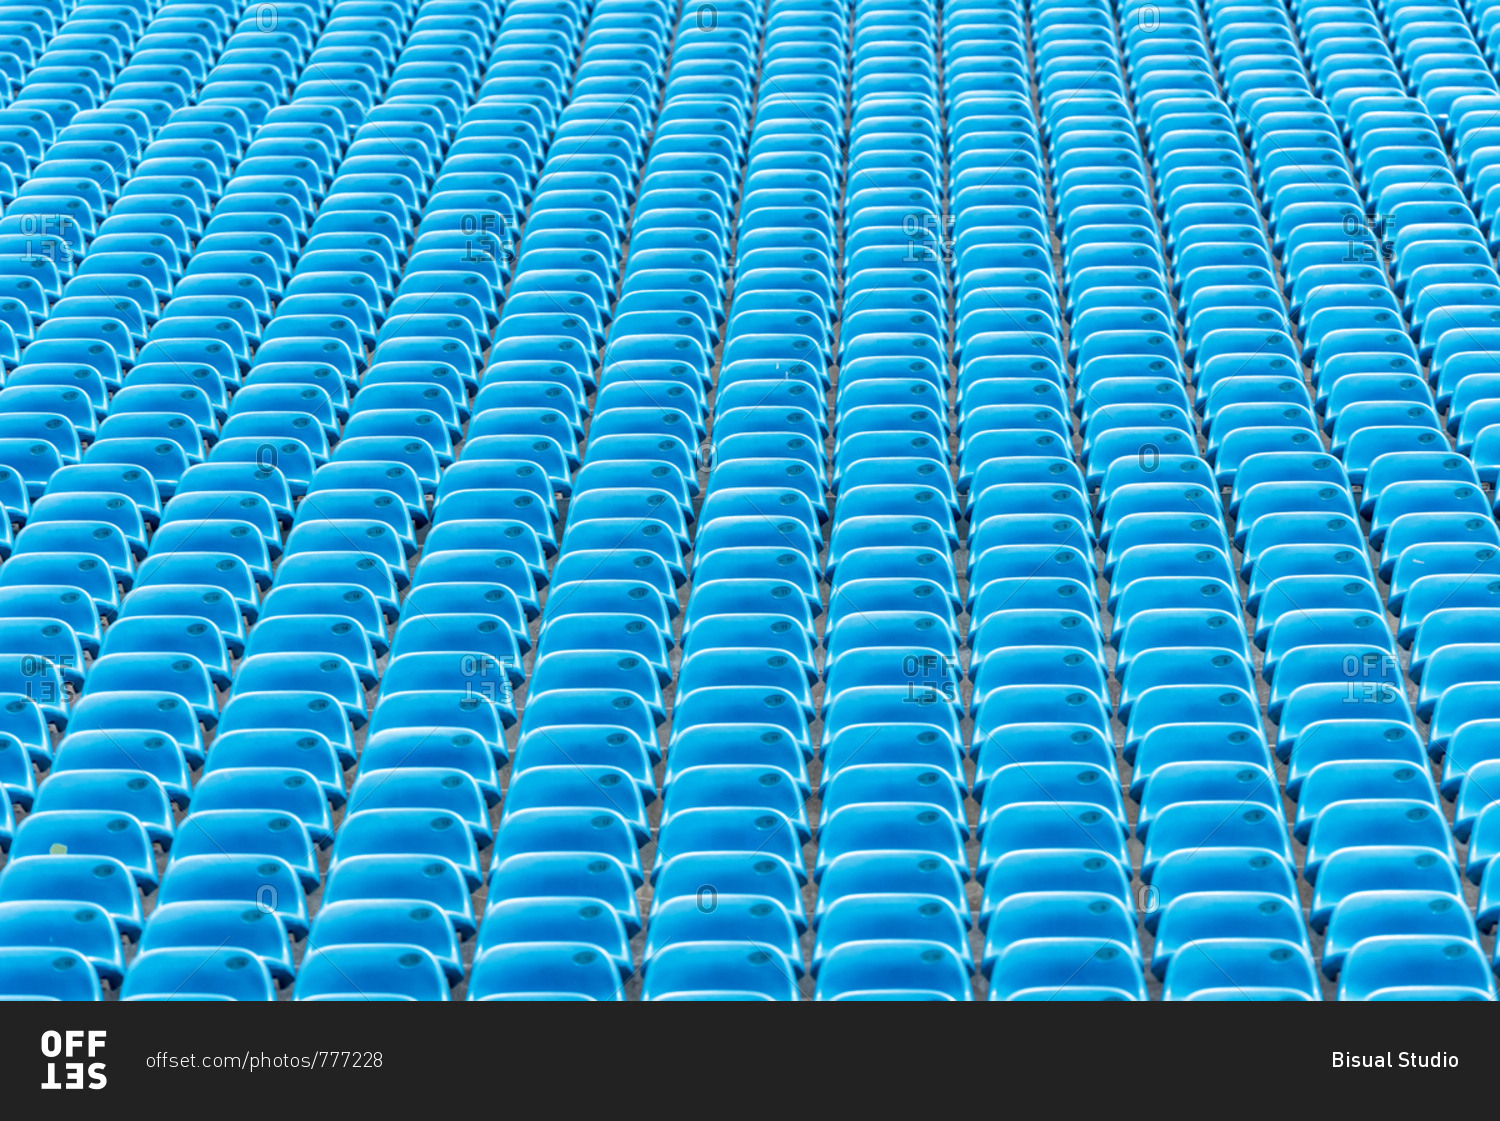 Blue Stadium Seats empty